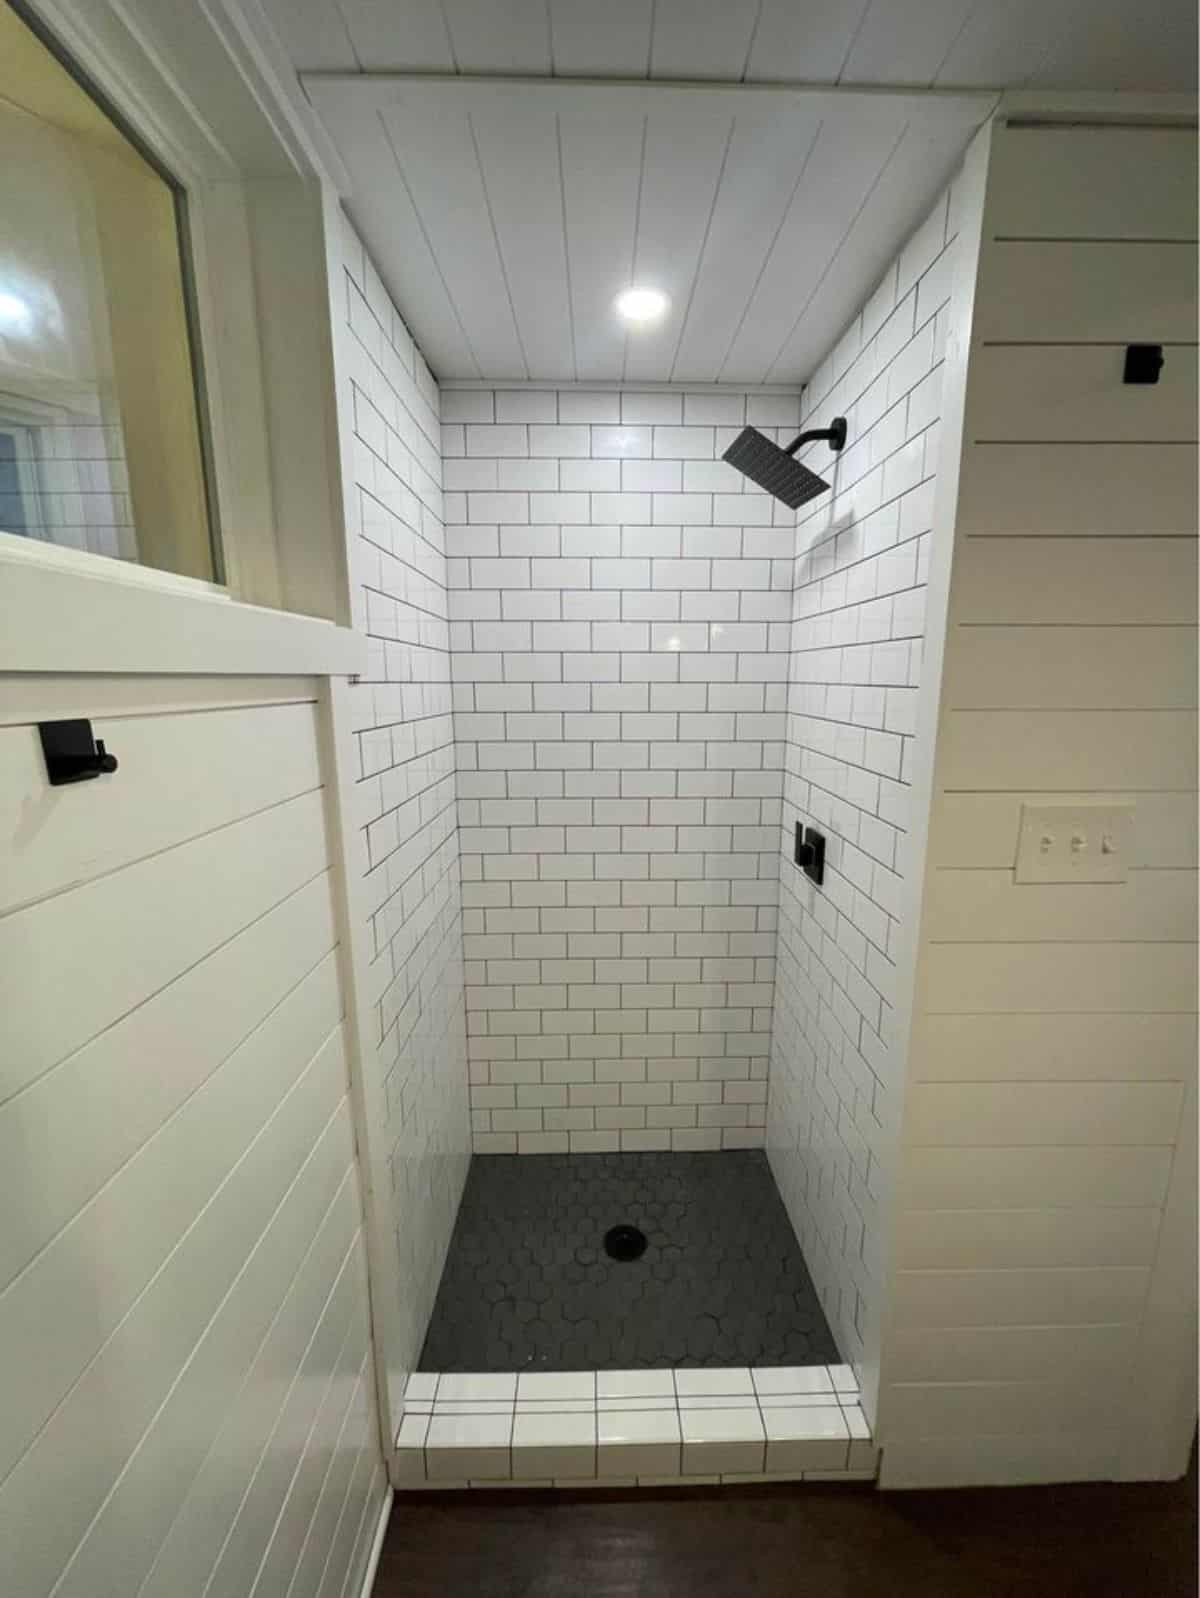 Separate shower area in bathroom